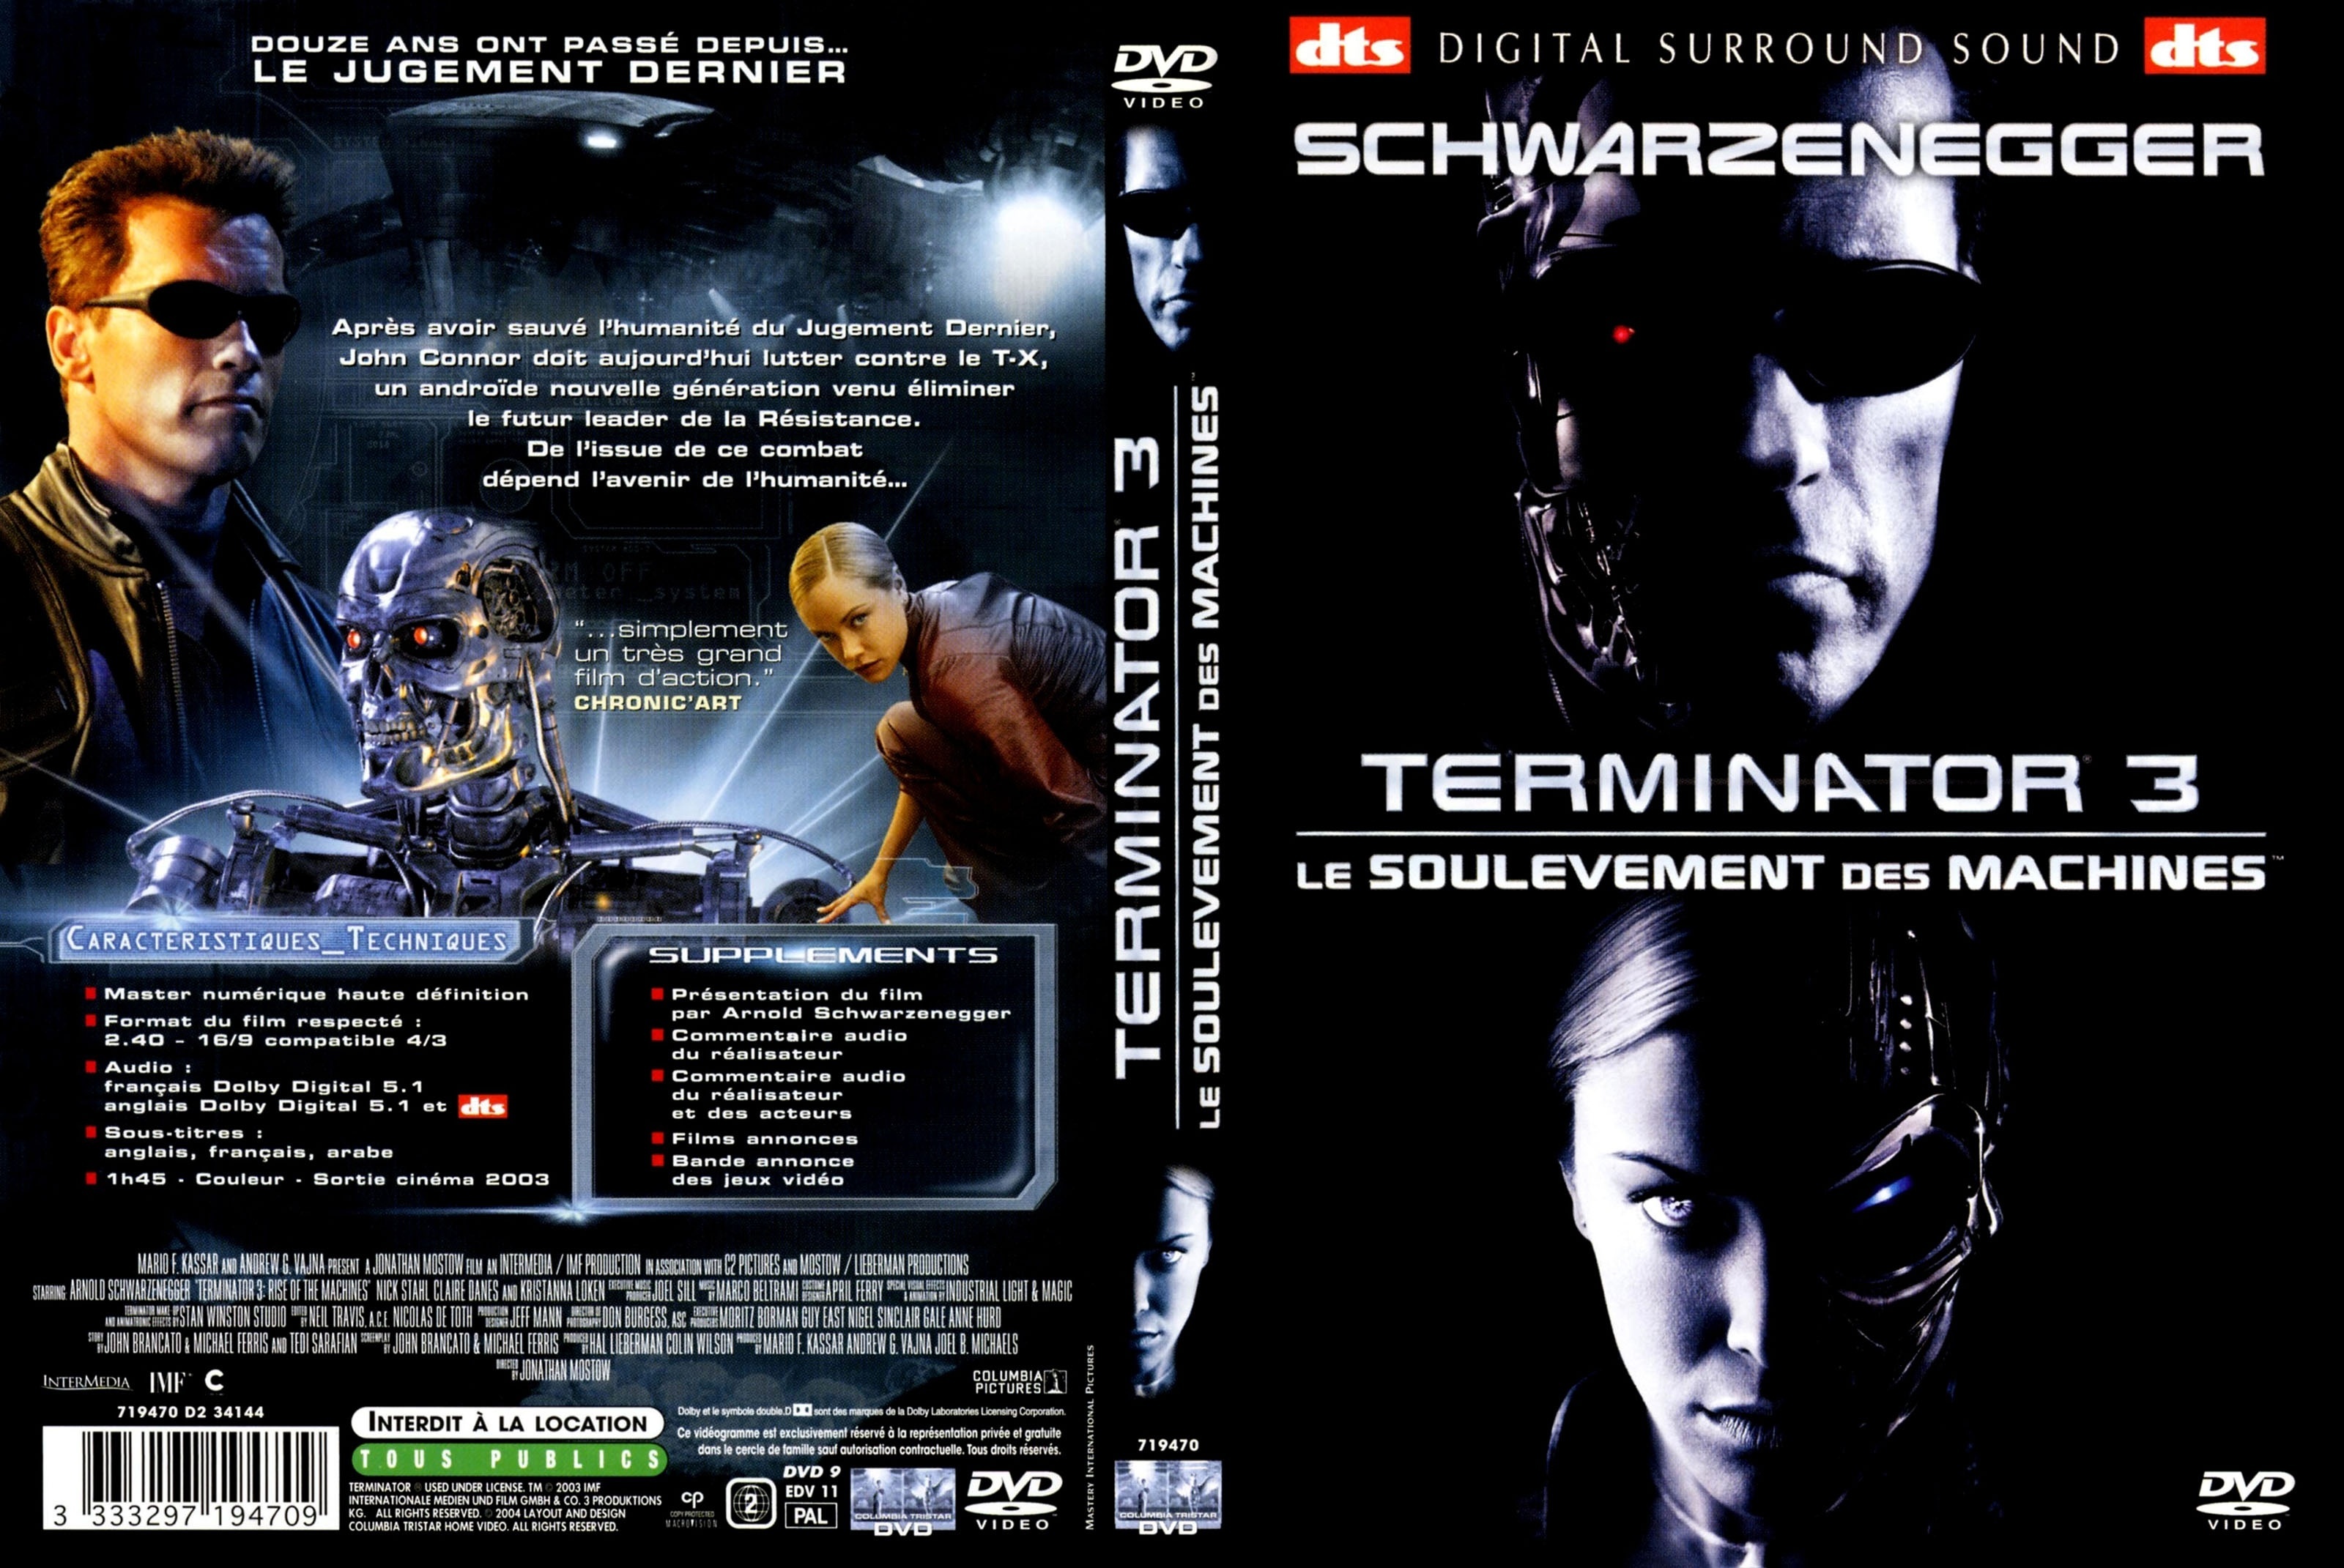 Jaquette DVD Terminator 3